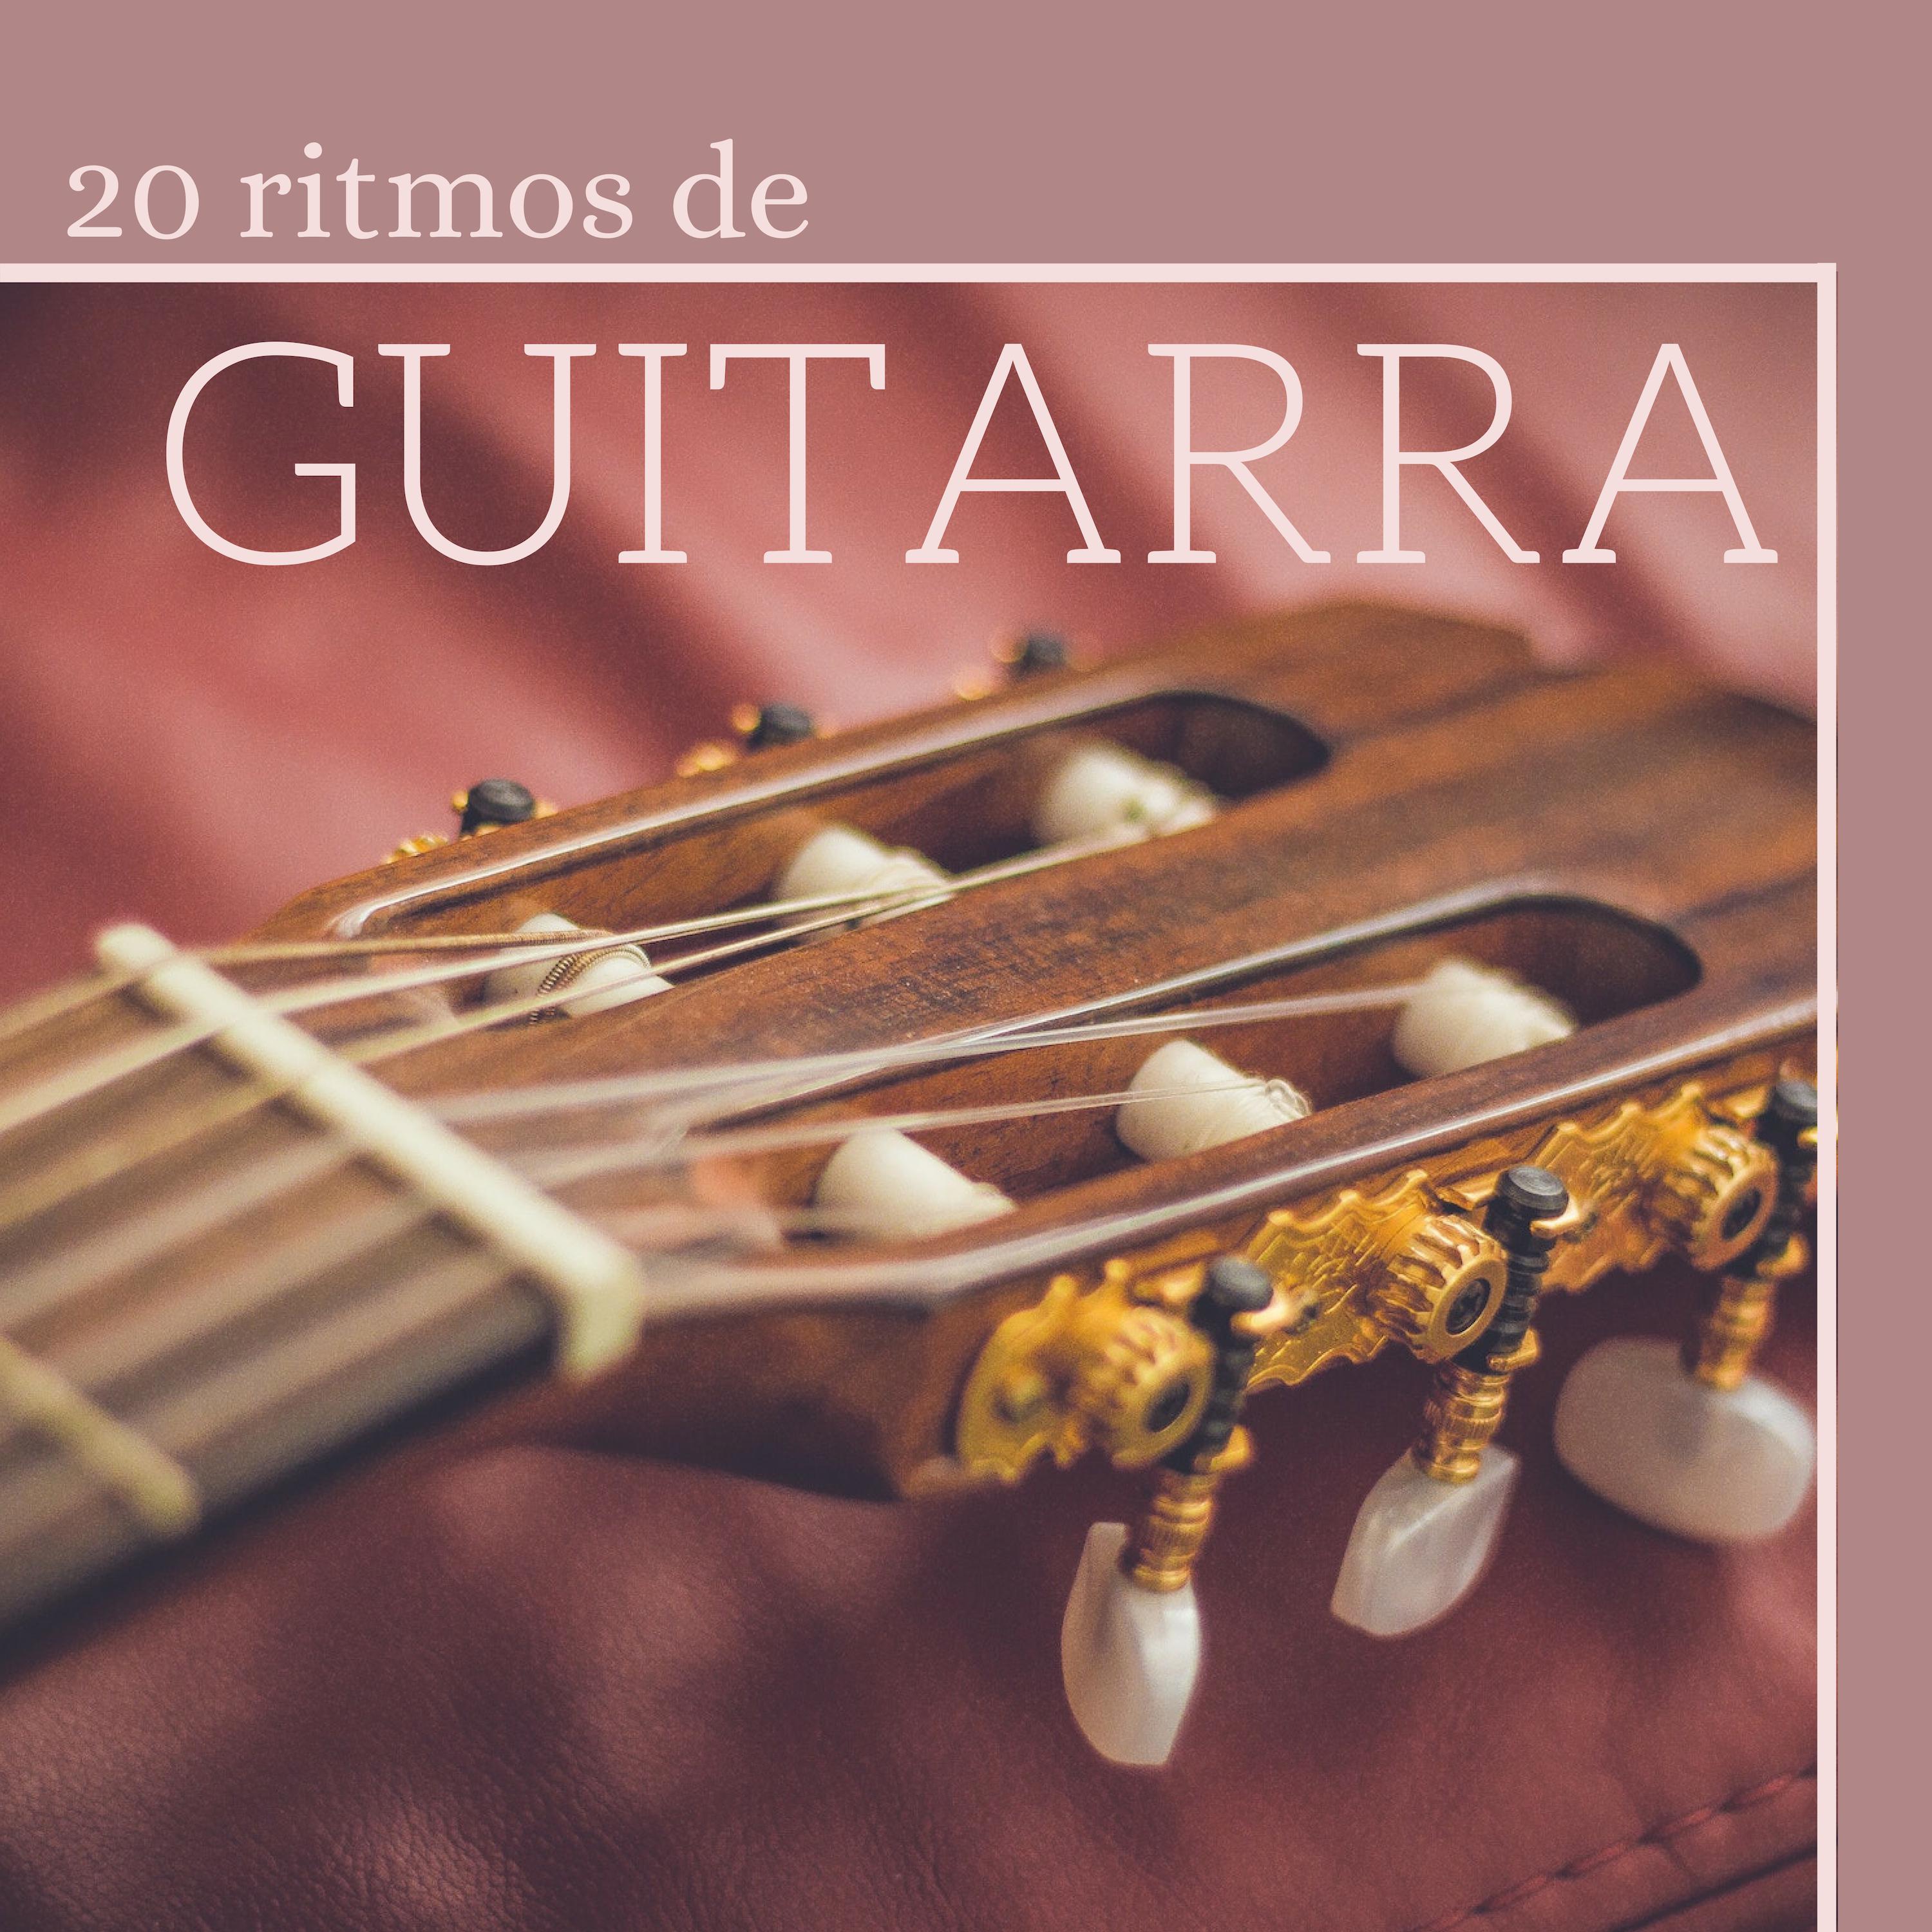 La Guitarra Ma gica